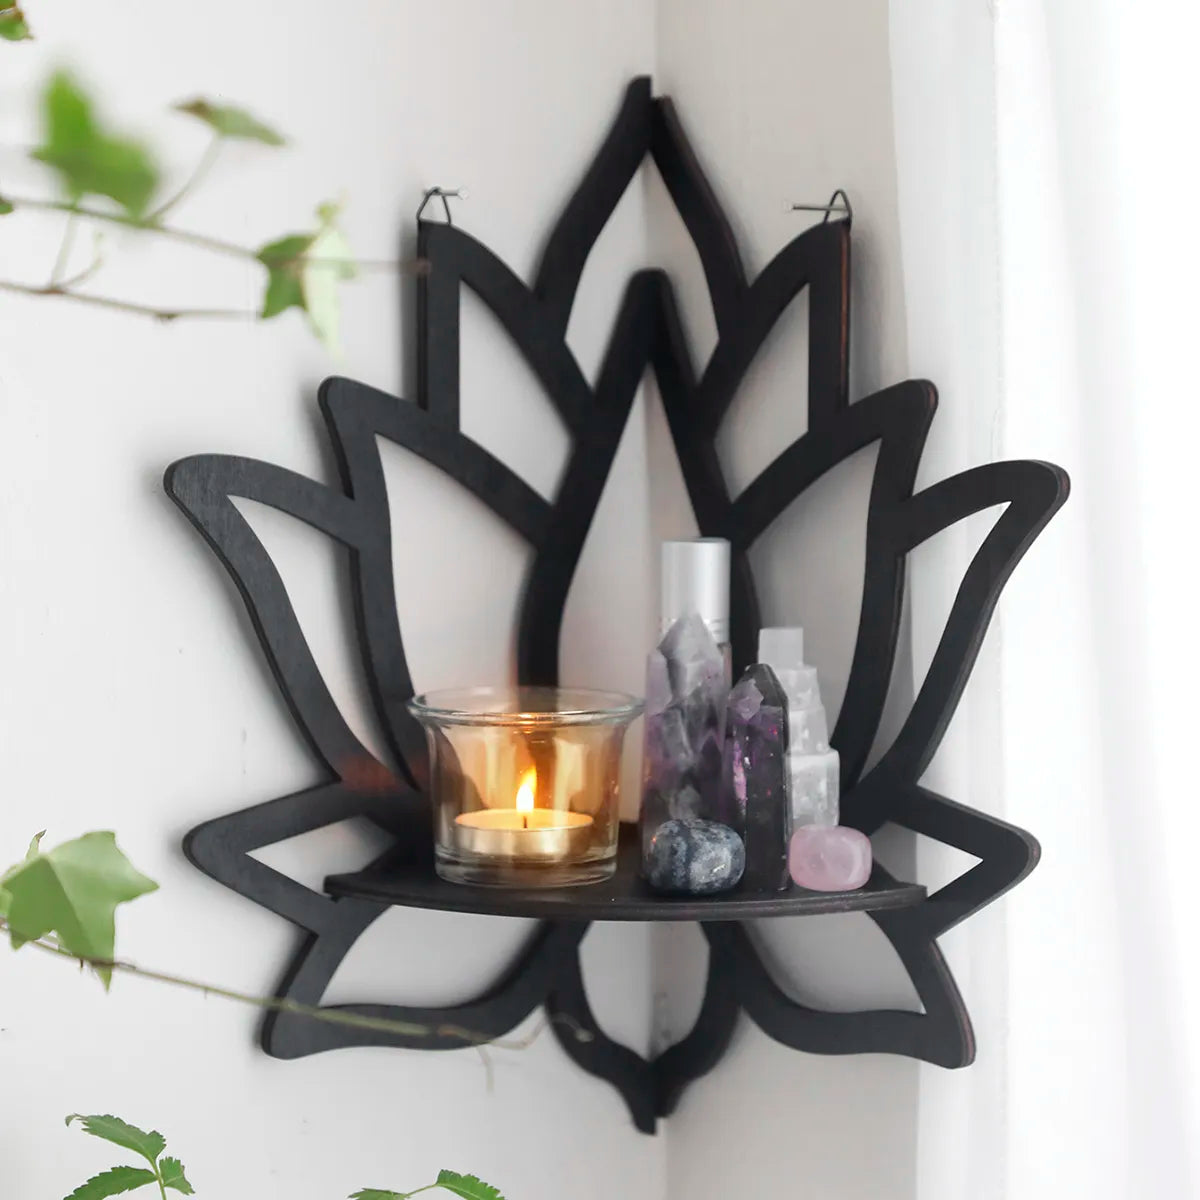 Lotus Crystal Corner Shelf Crystal Shelf Display Black Wooden Wall Shelves Essential Oil Shelf Witchy Decor Aesthetic Spiritual